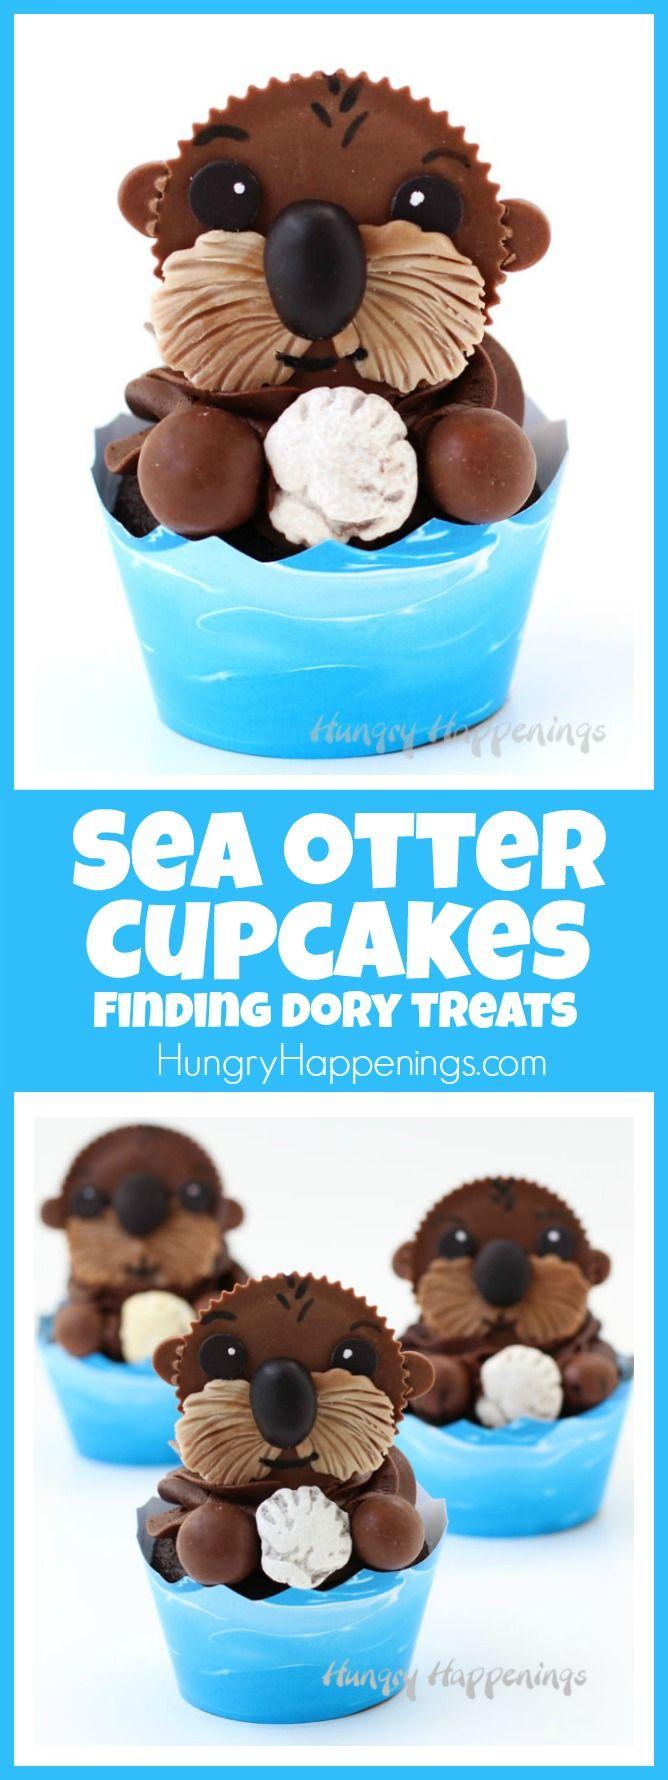 Wedding - Sea Otter Cupcakes - Finding Dory Treats